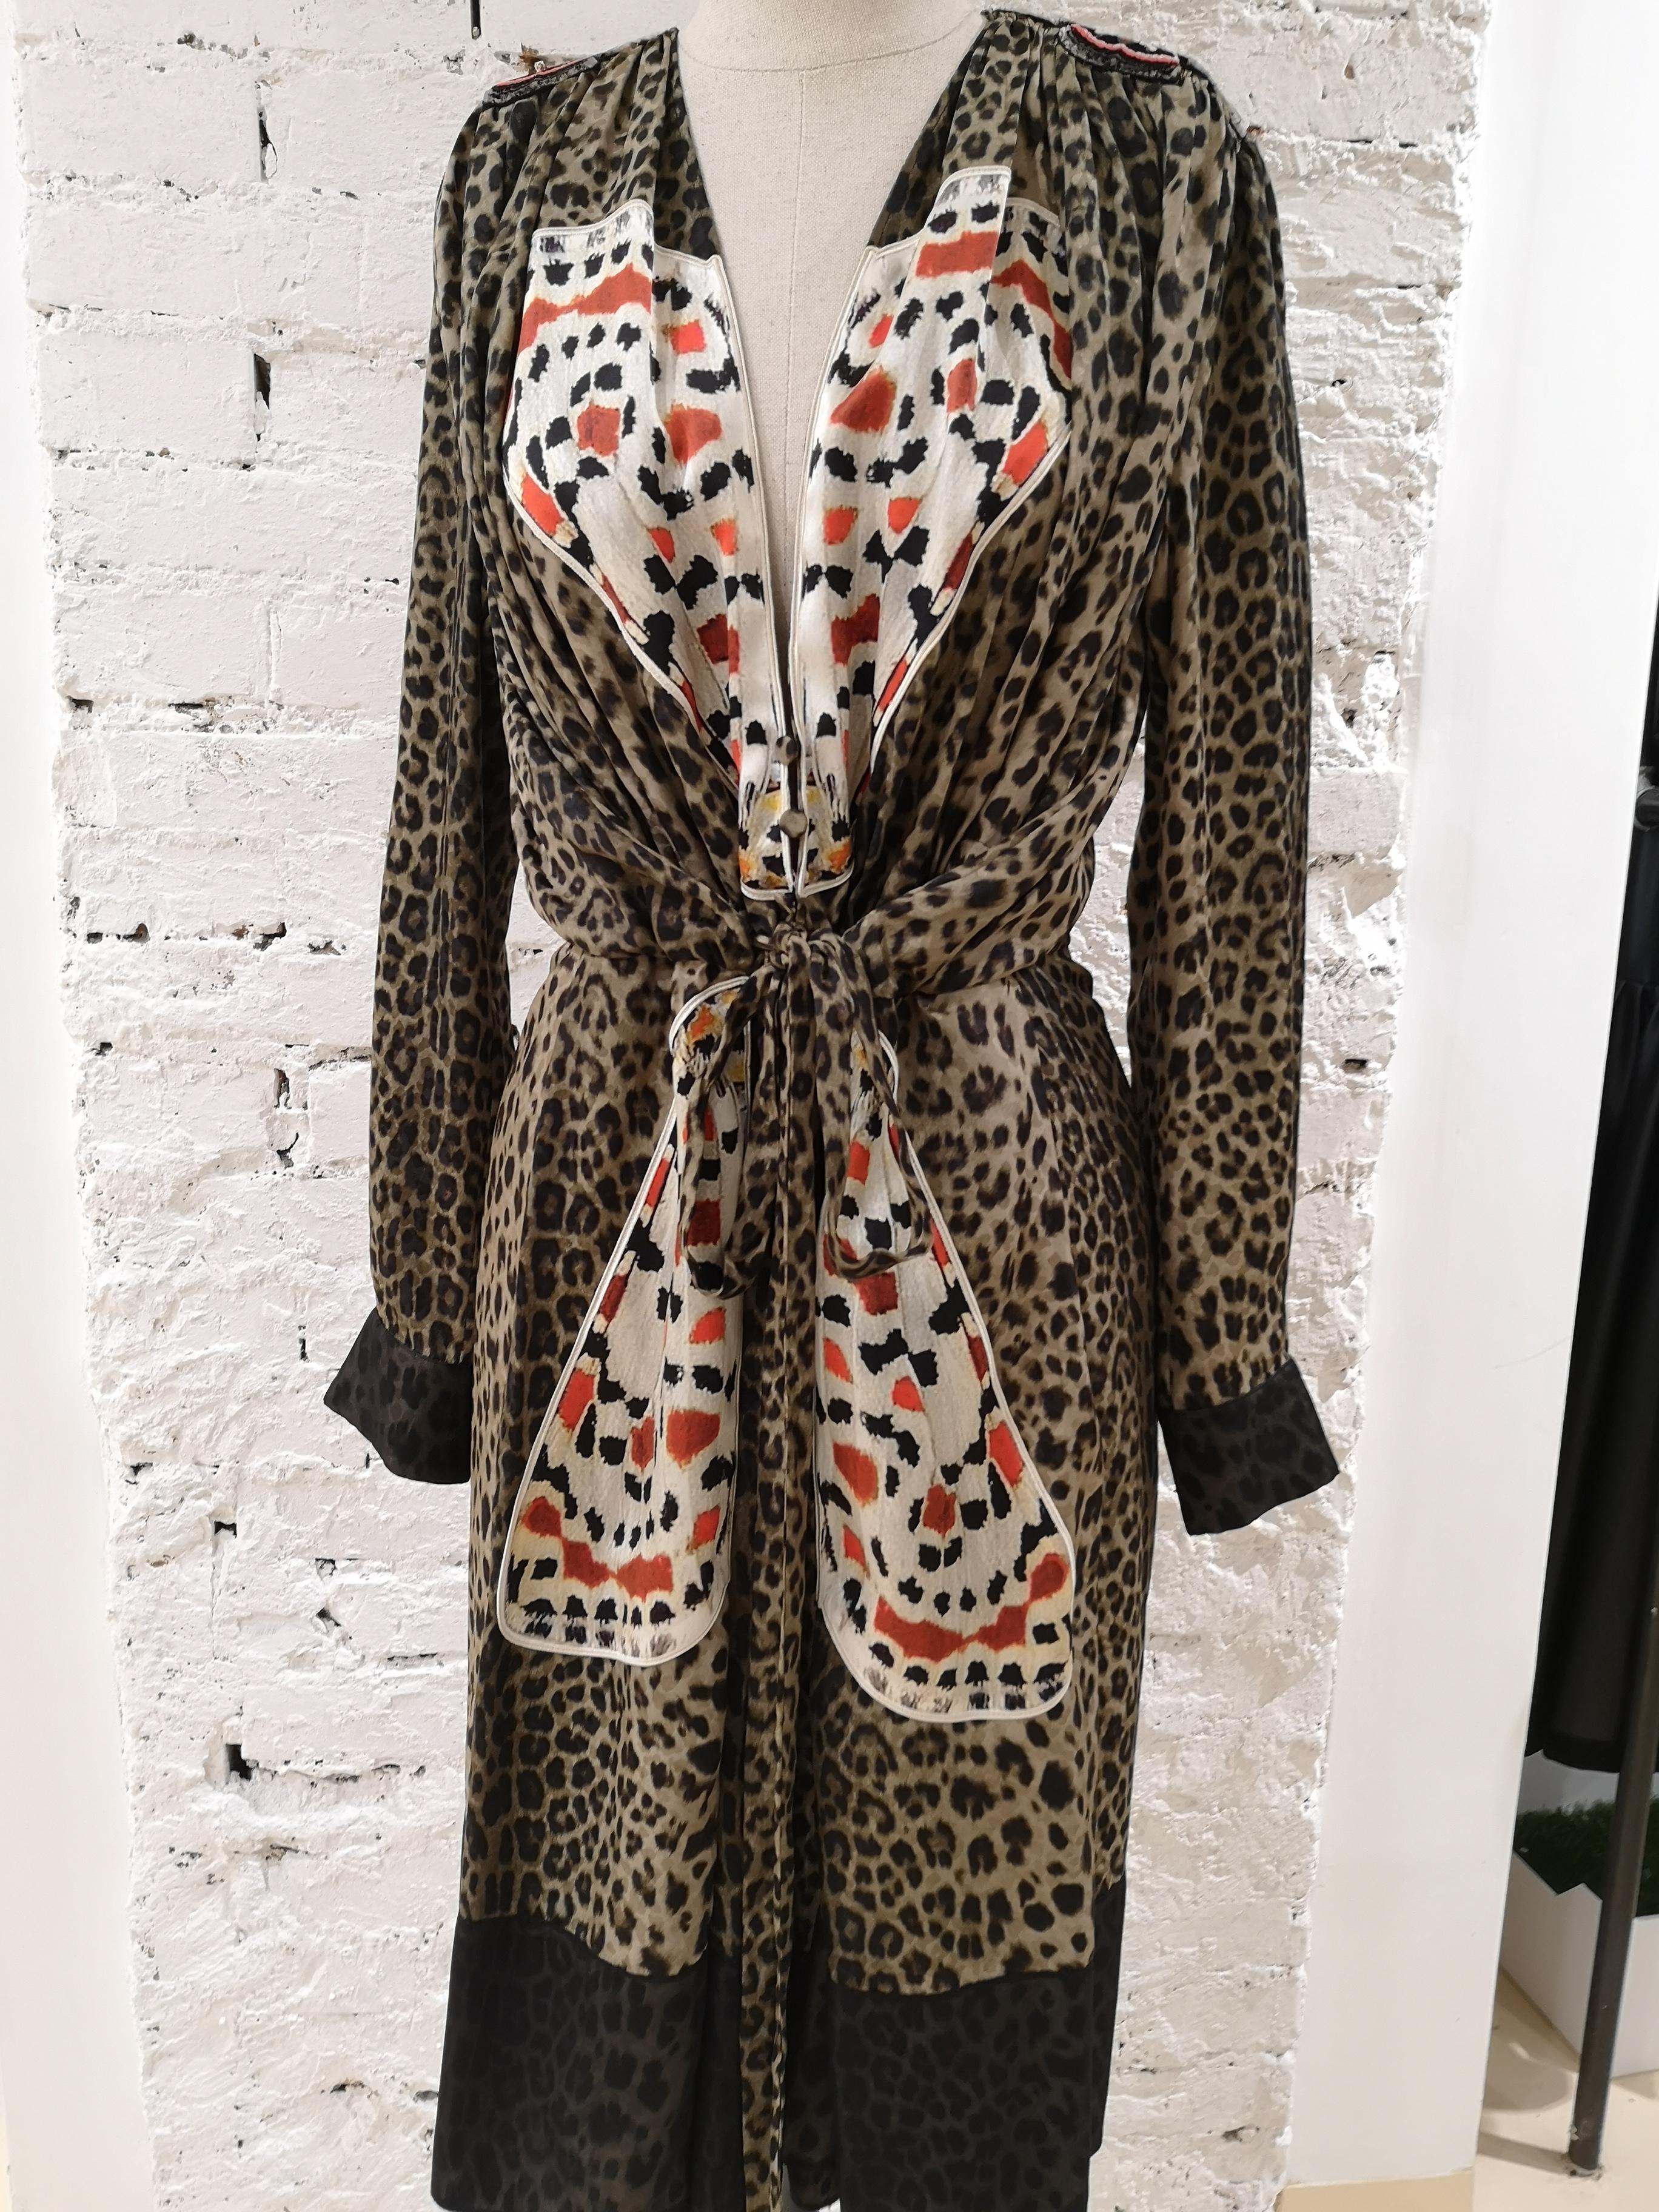 Givenchy Leopard Butterfly Dress 10